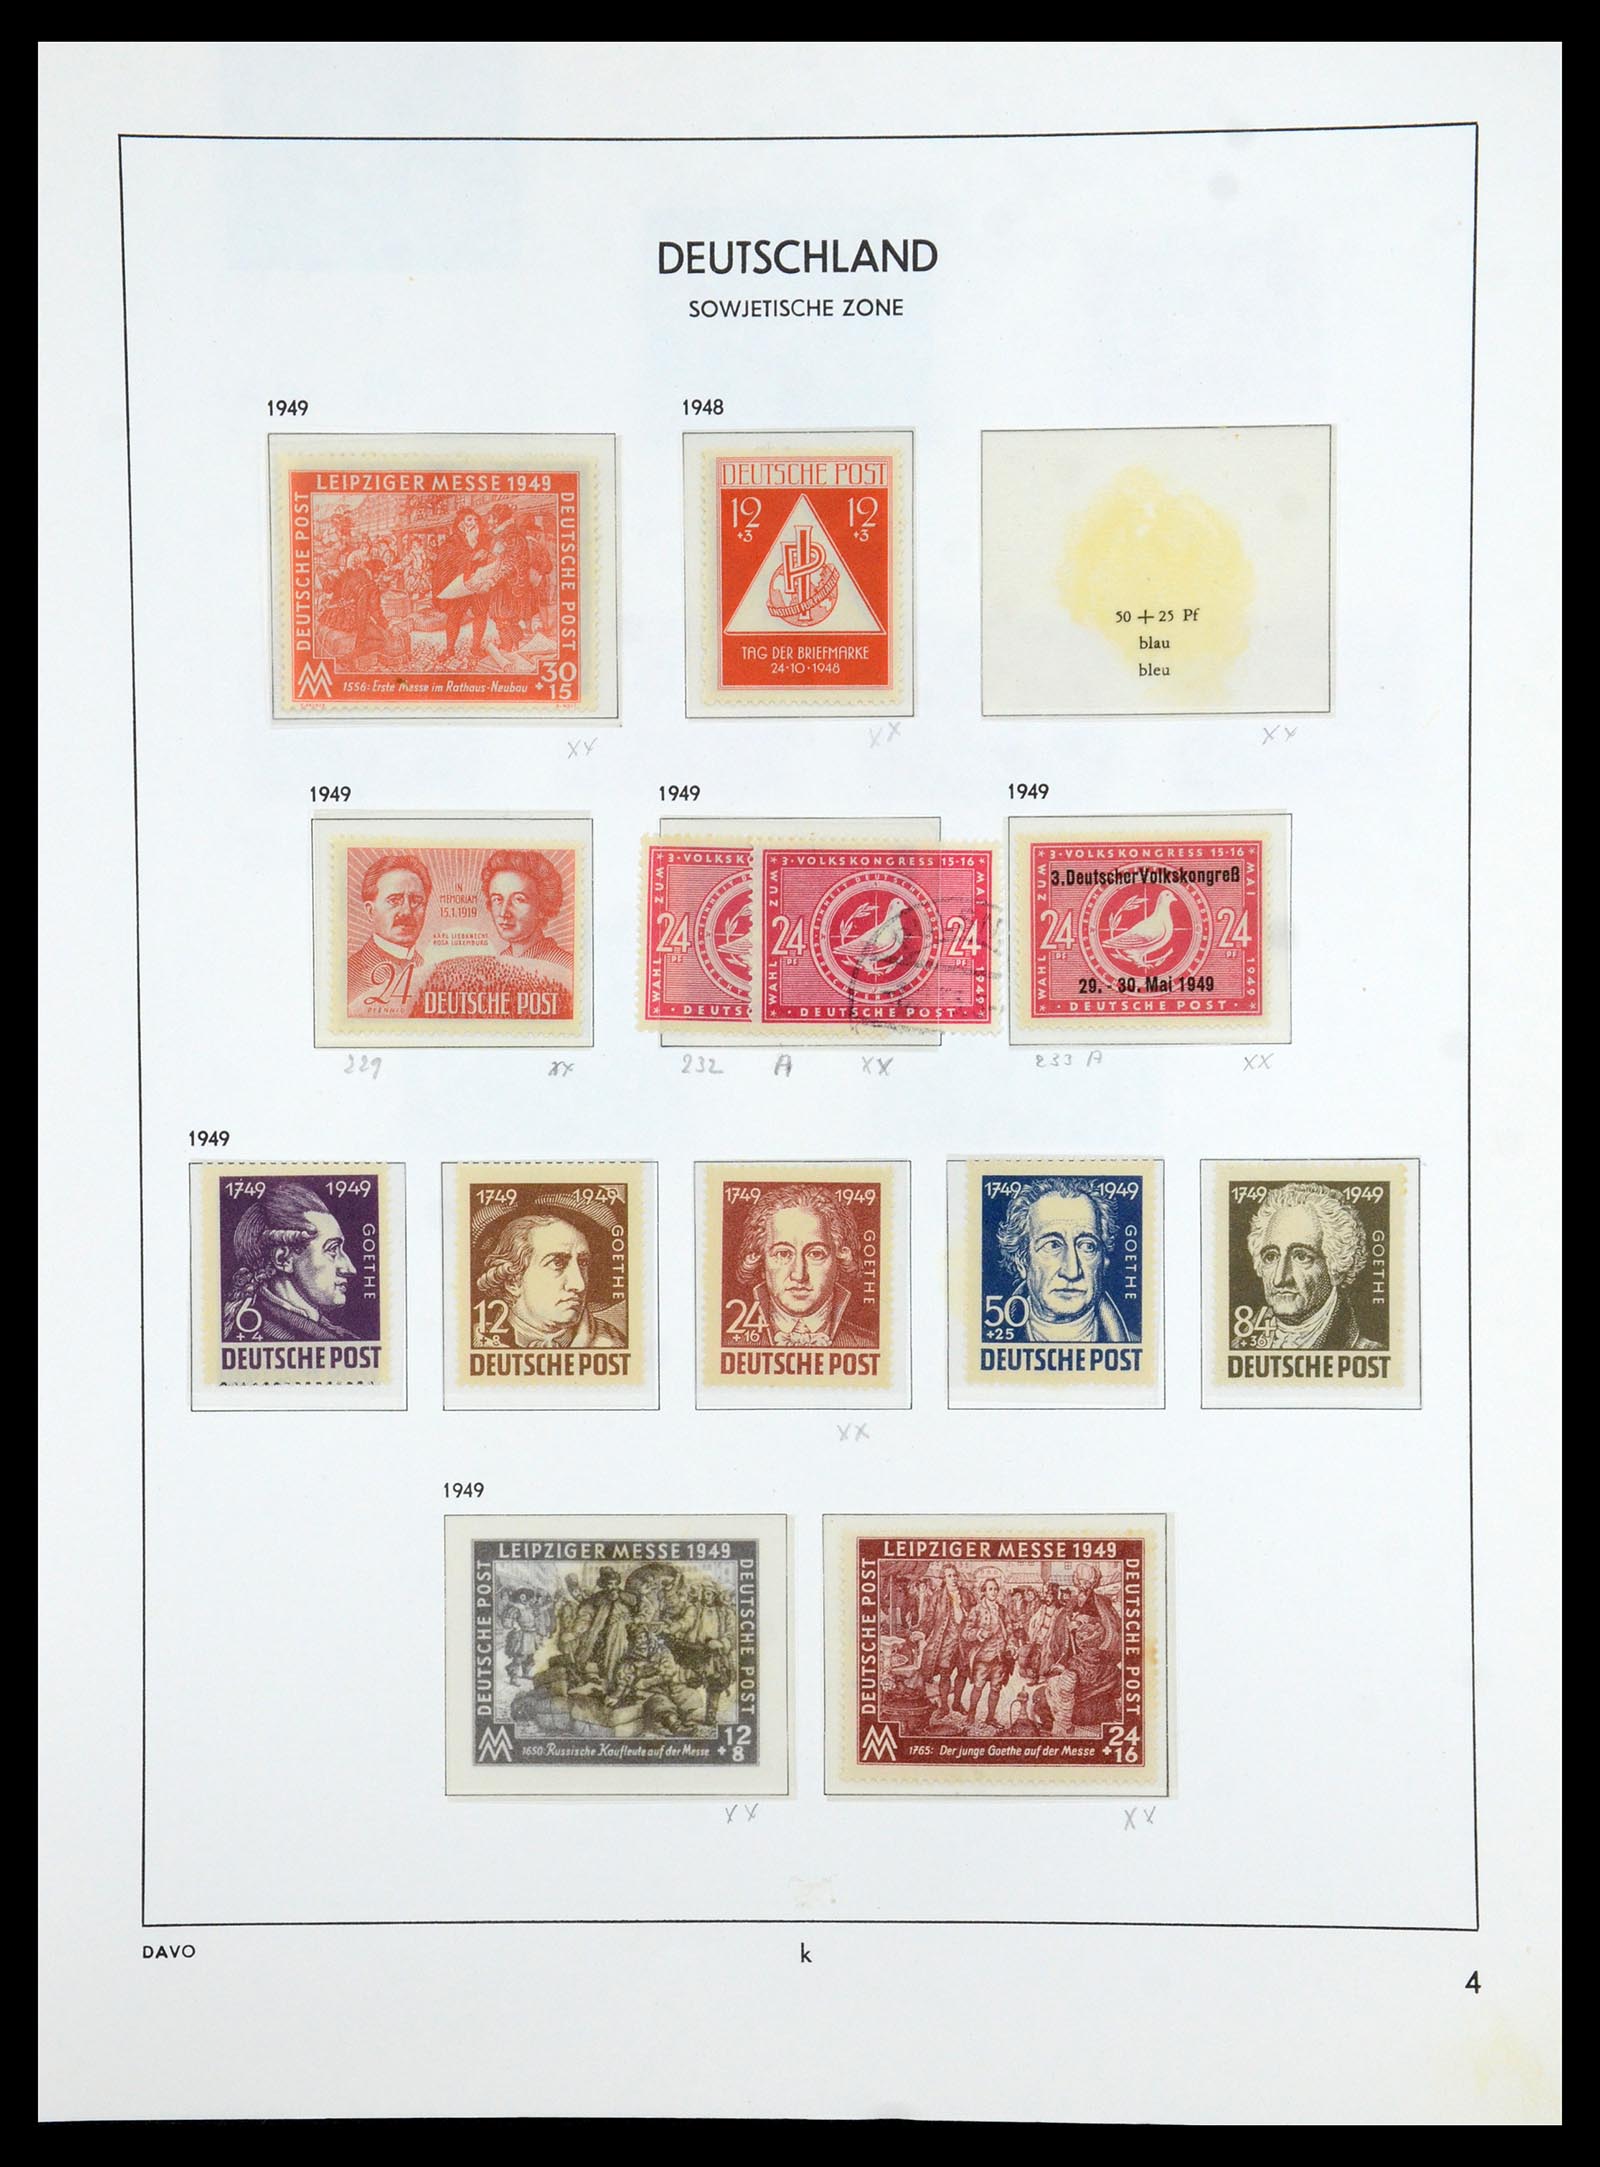 36421 044 - Stamp collection 36421 Soviet Zone 1945-1949.